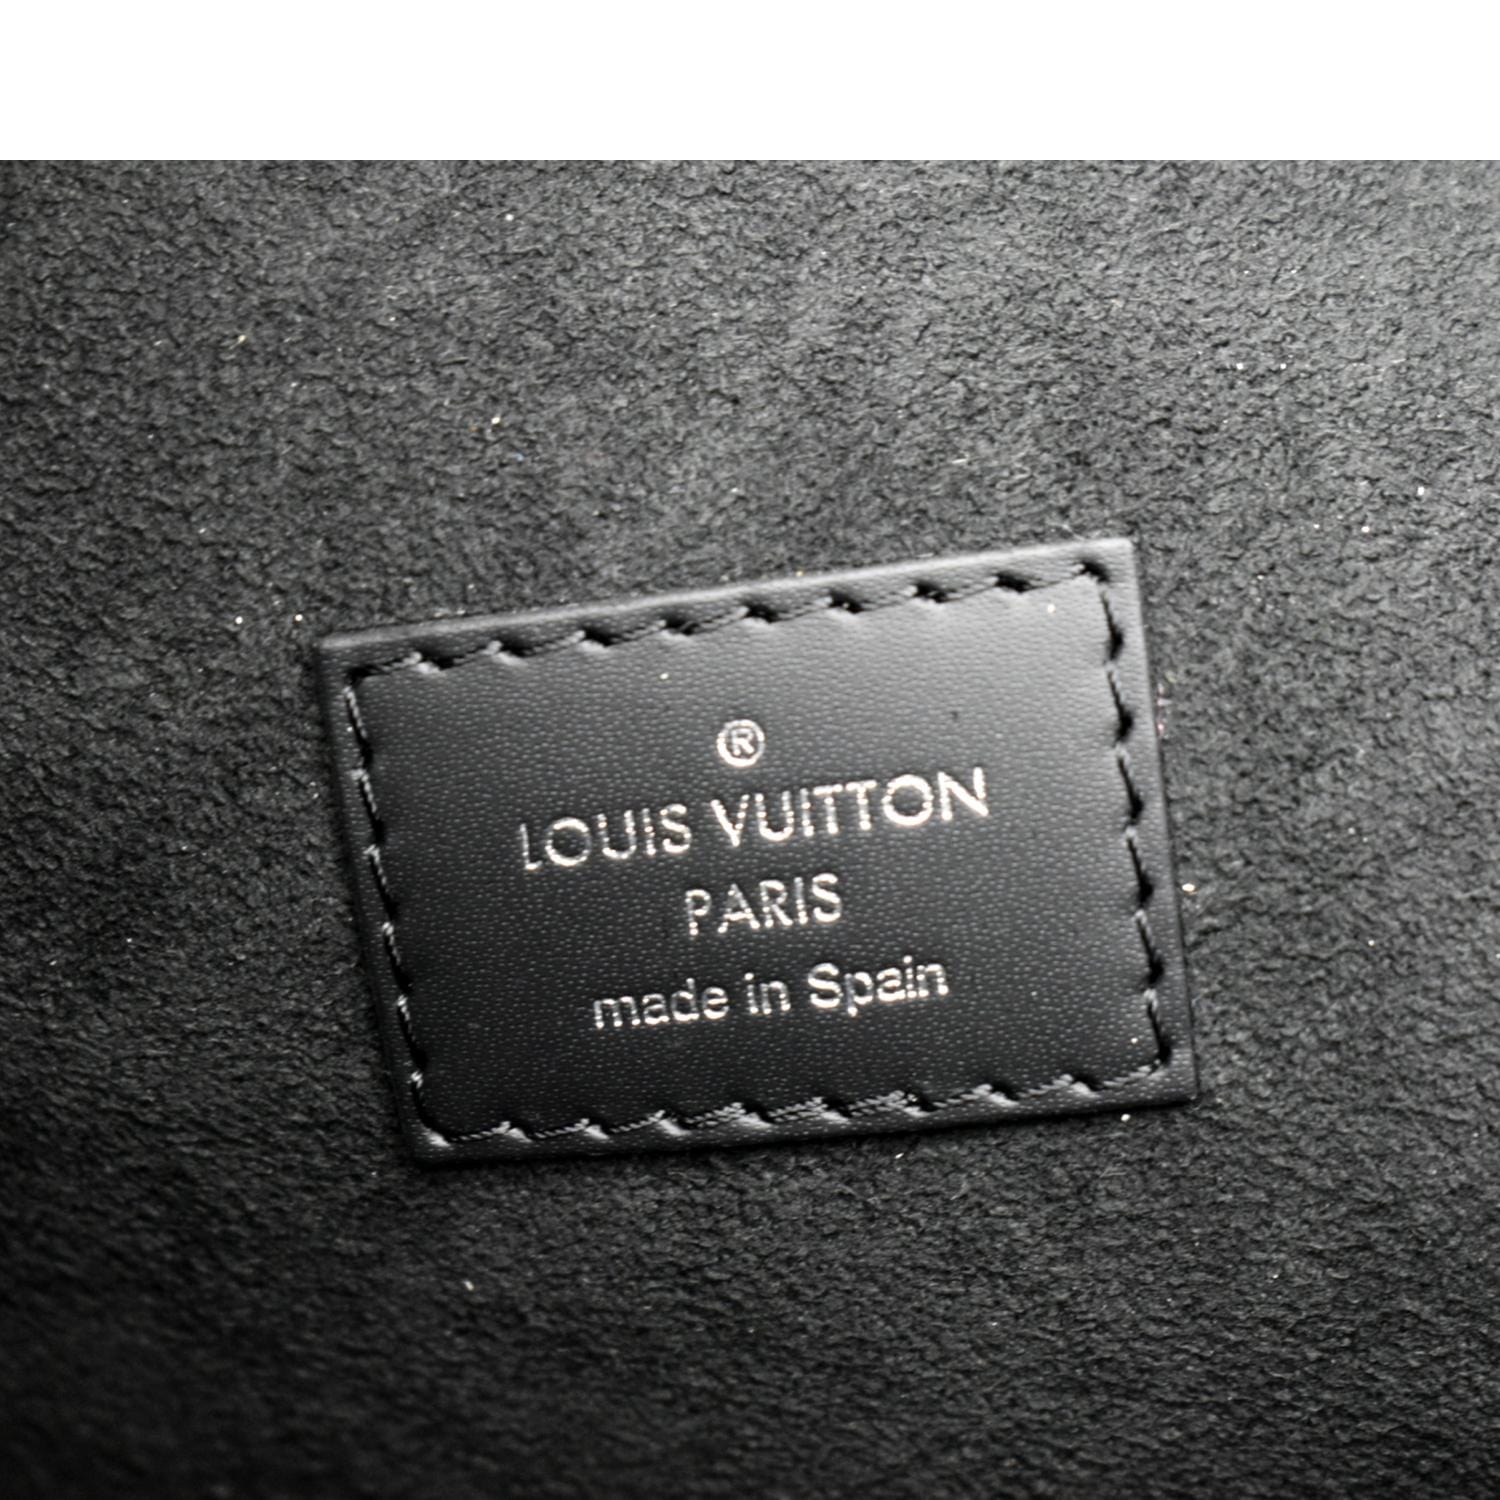 LVicons - Louis Vuitton Neverfull Epi